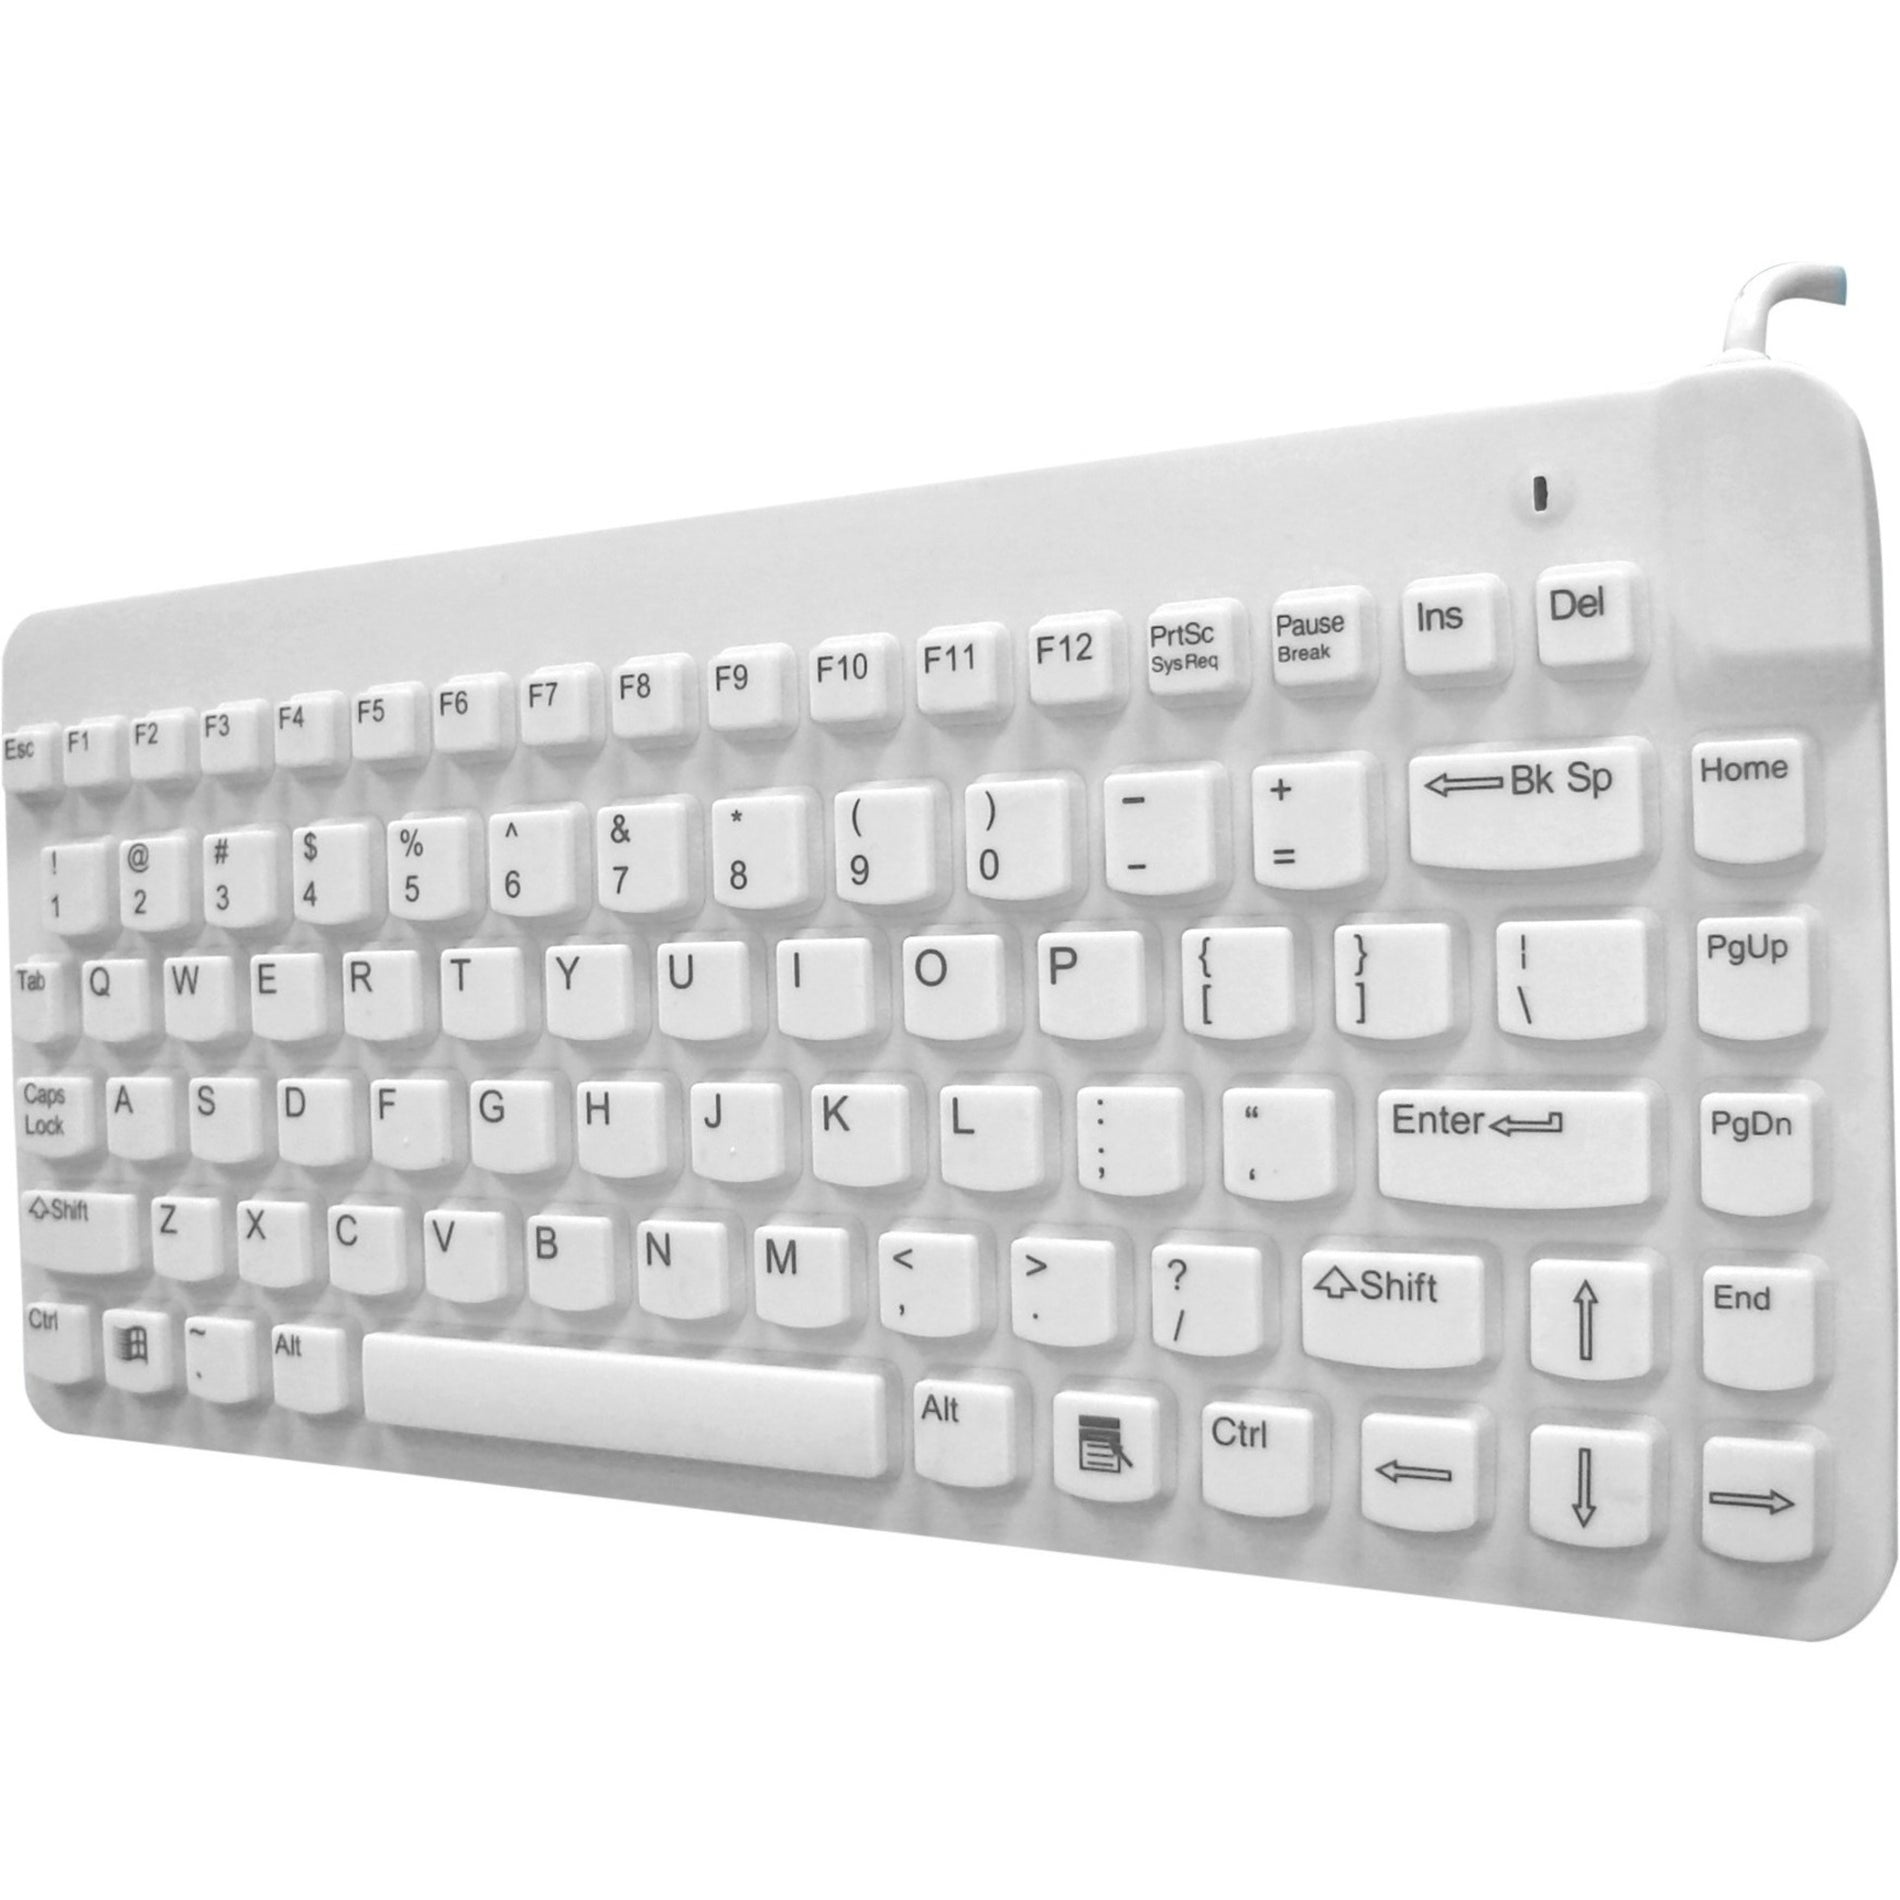 Man & Machine SCLP/MAG/W5 Slim Cool Premium Waterproof Disinfectable Silent 12" Keyboard, White, USB